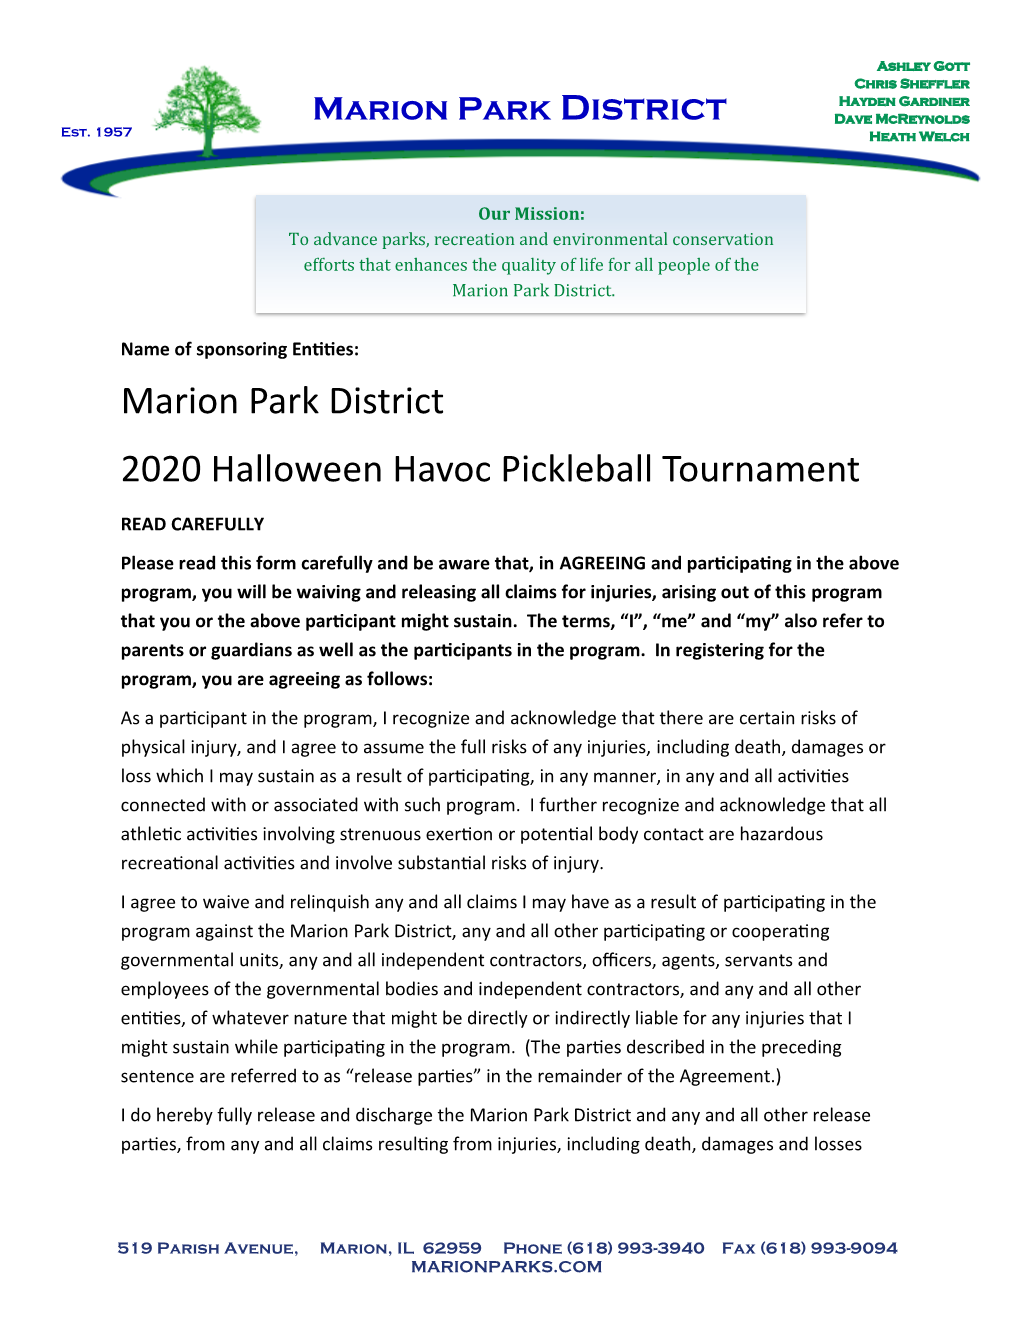 Marion Park District 2020 Halloween Havoc Pickleball Tournament